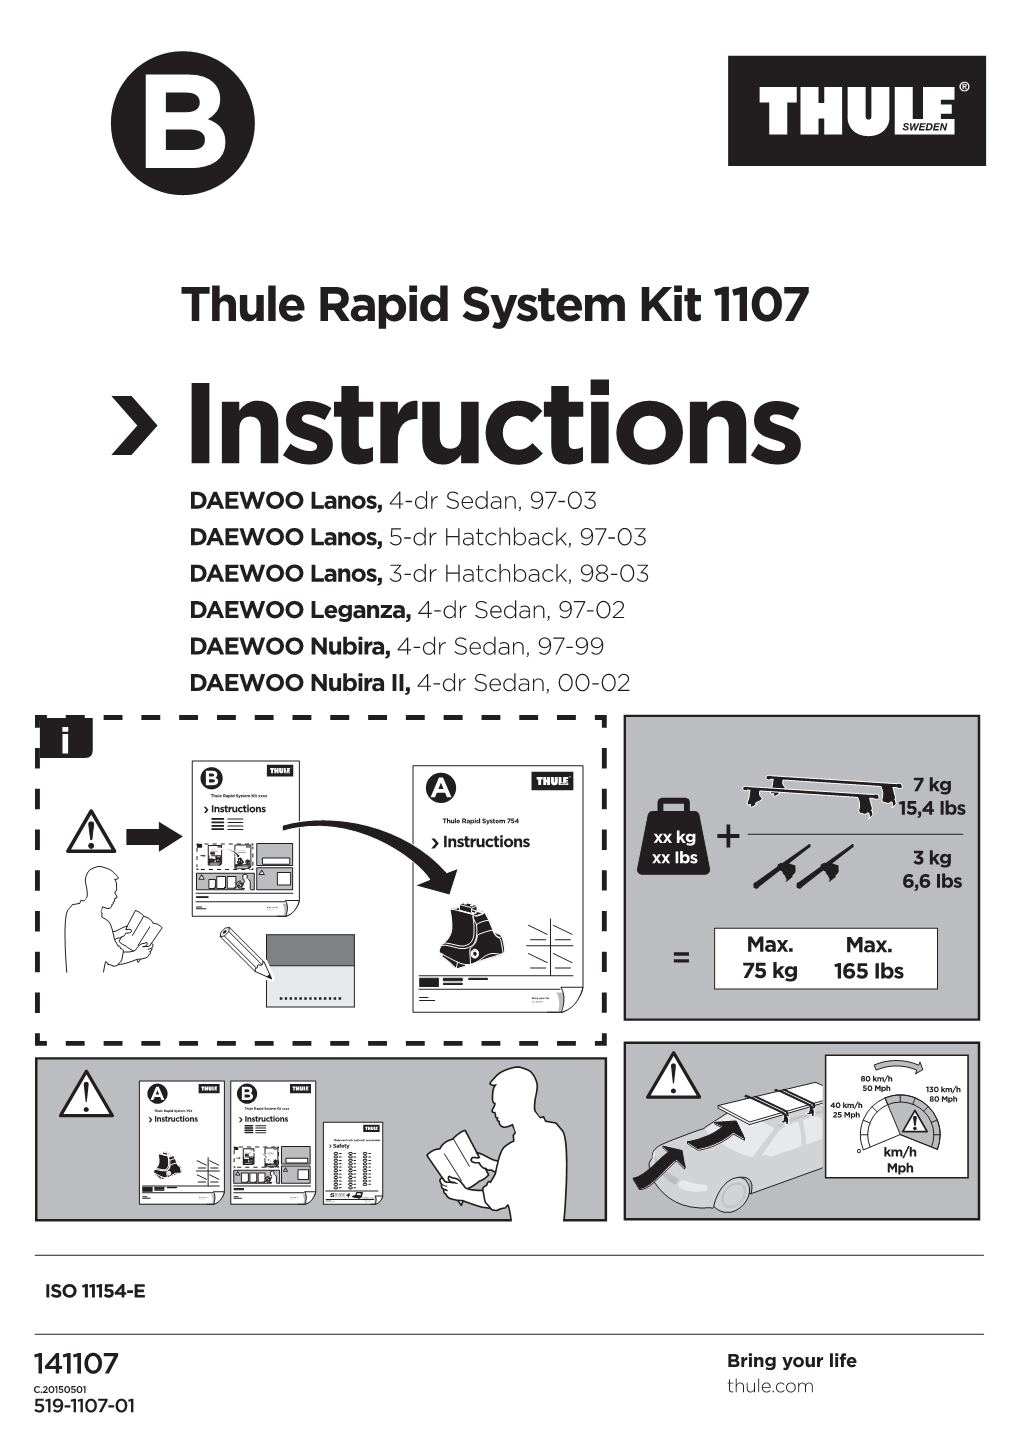 Thule Rapid System Kit 1107